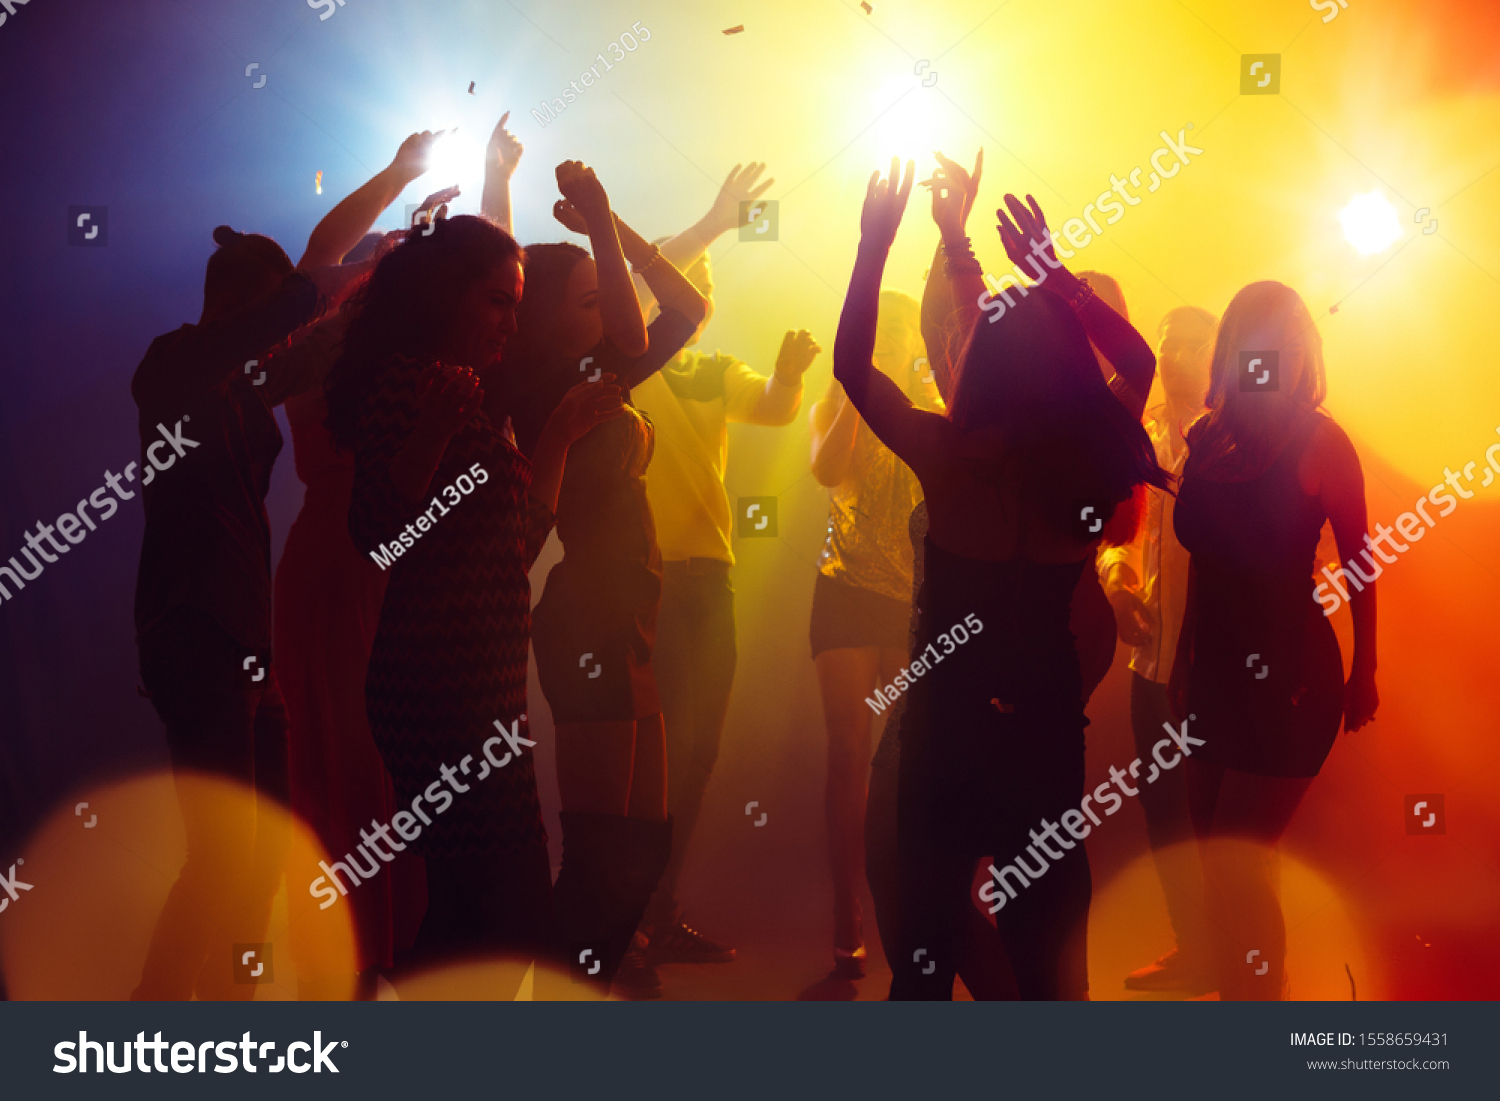 Holidays Crowd People Silhouette Raises Their Stock Photo 1558659431 ...